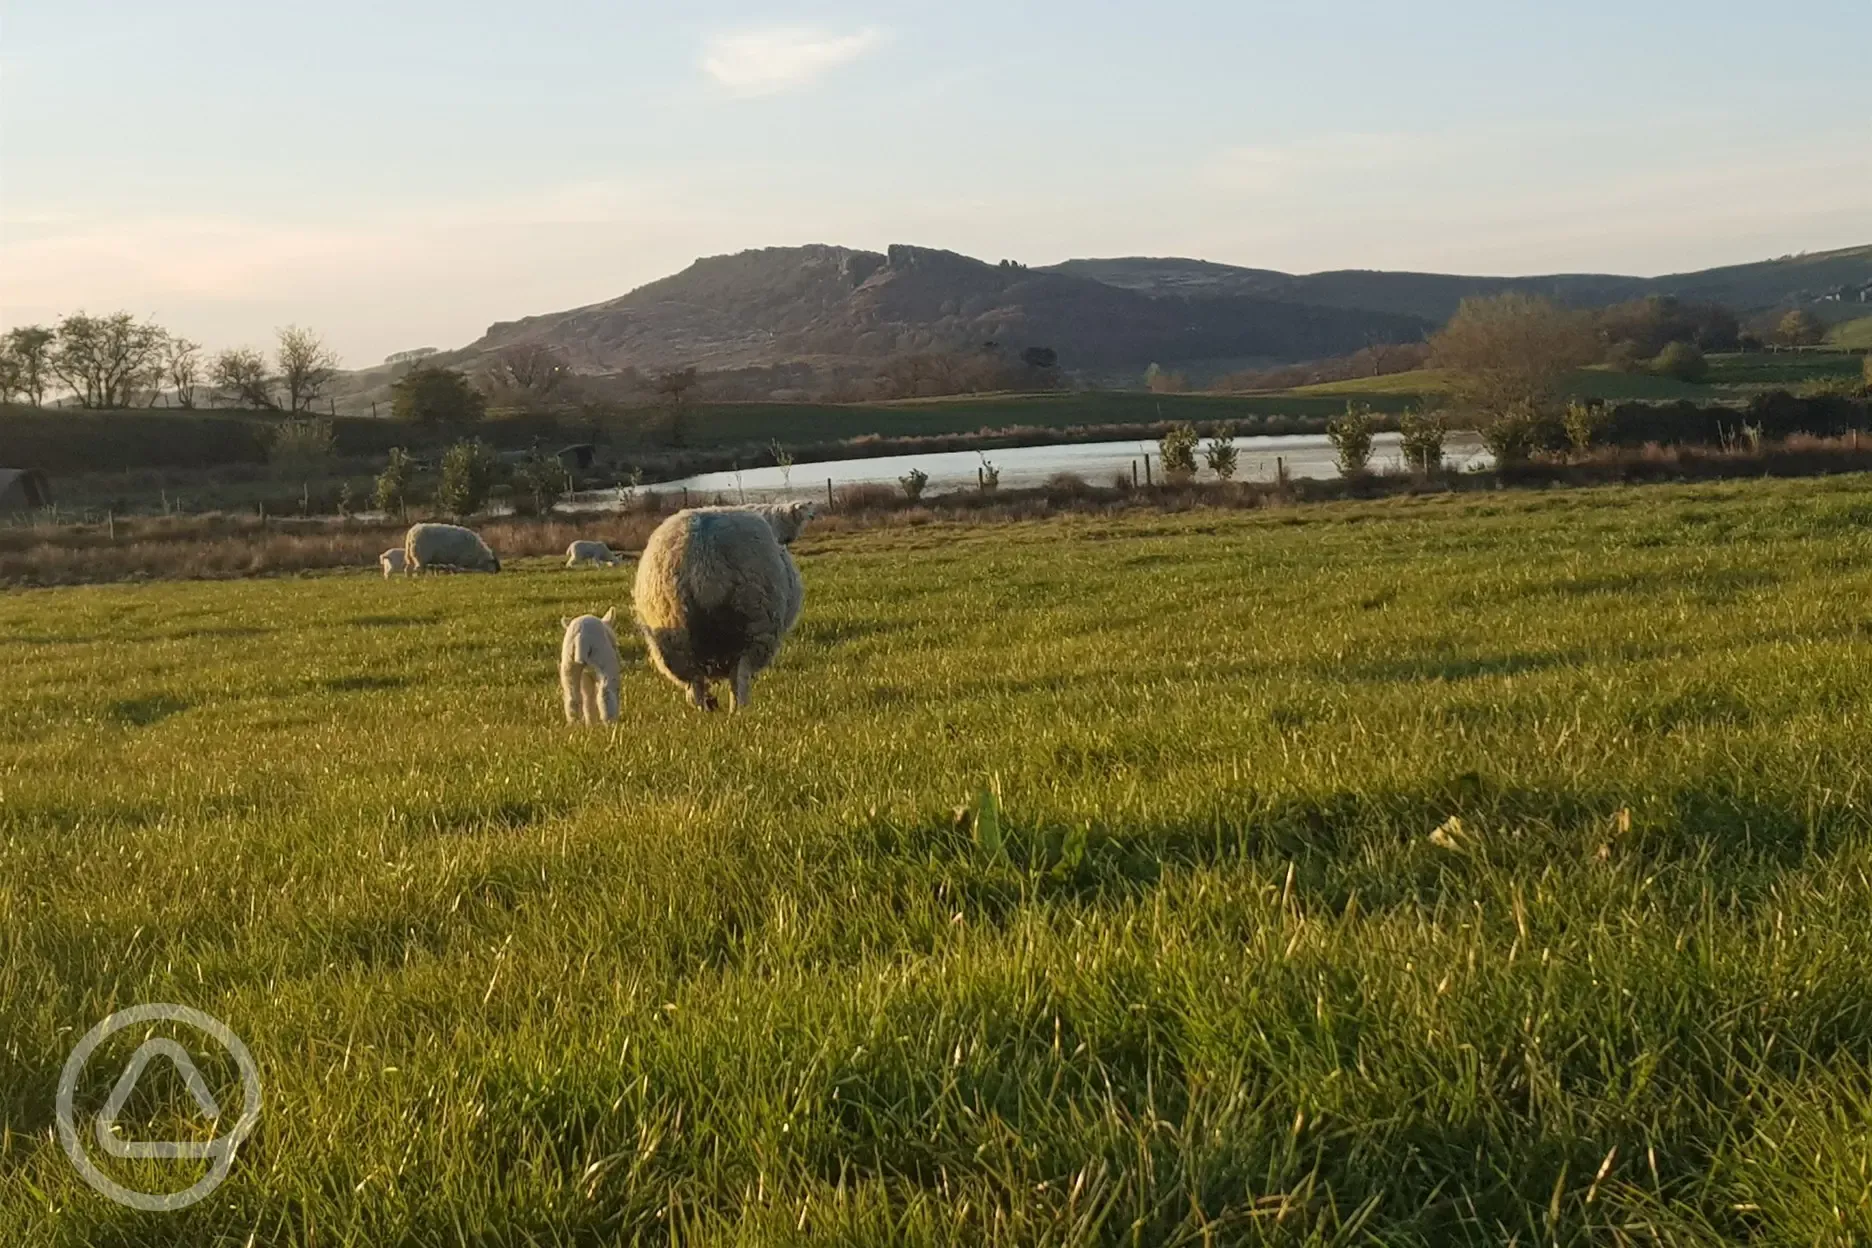 Sheep onsite